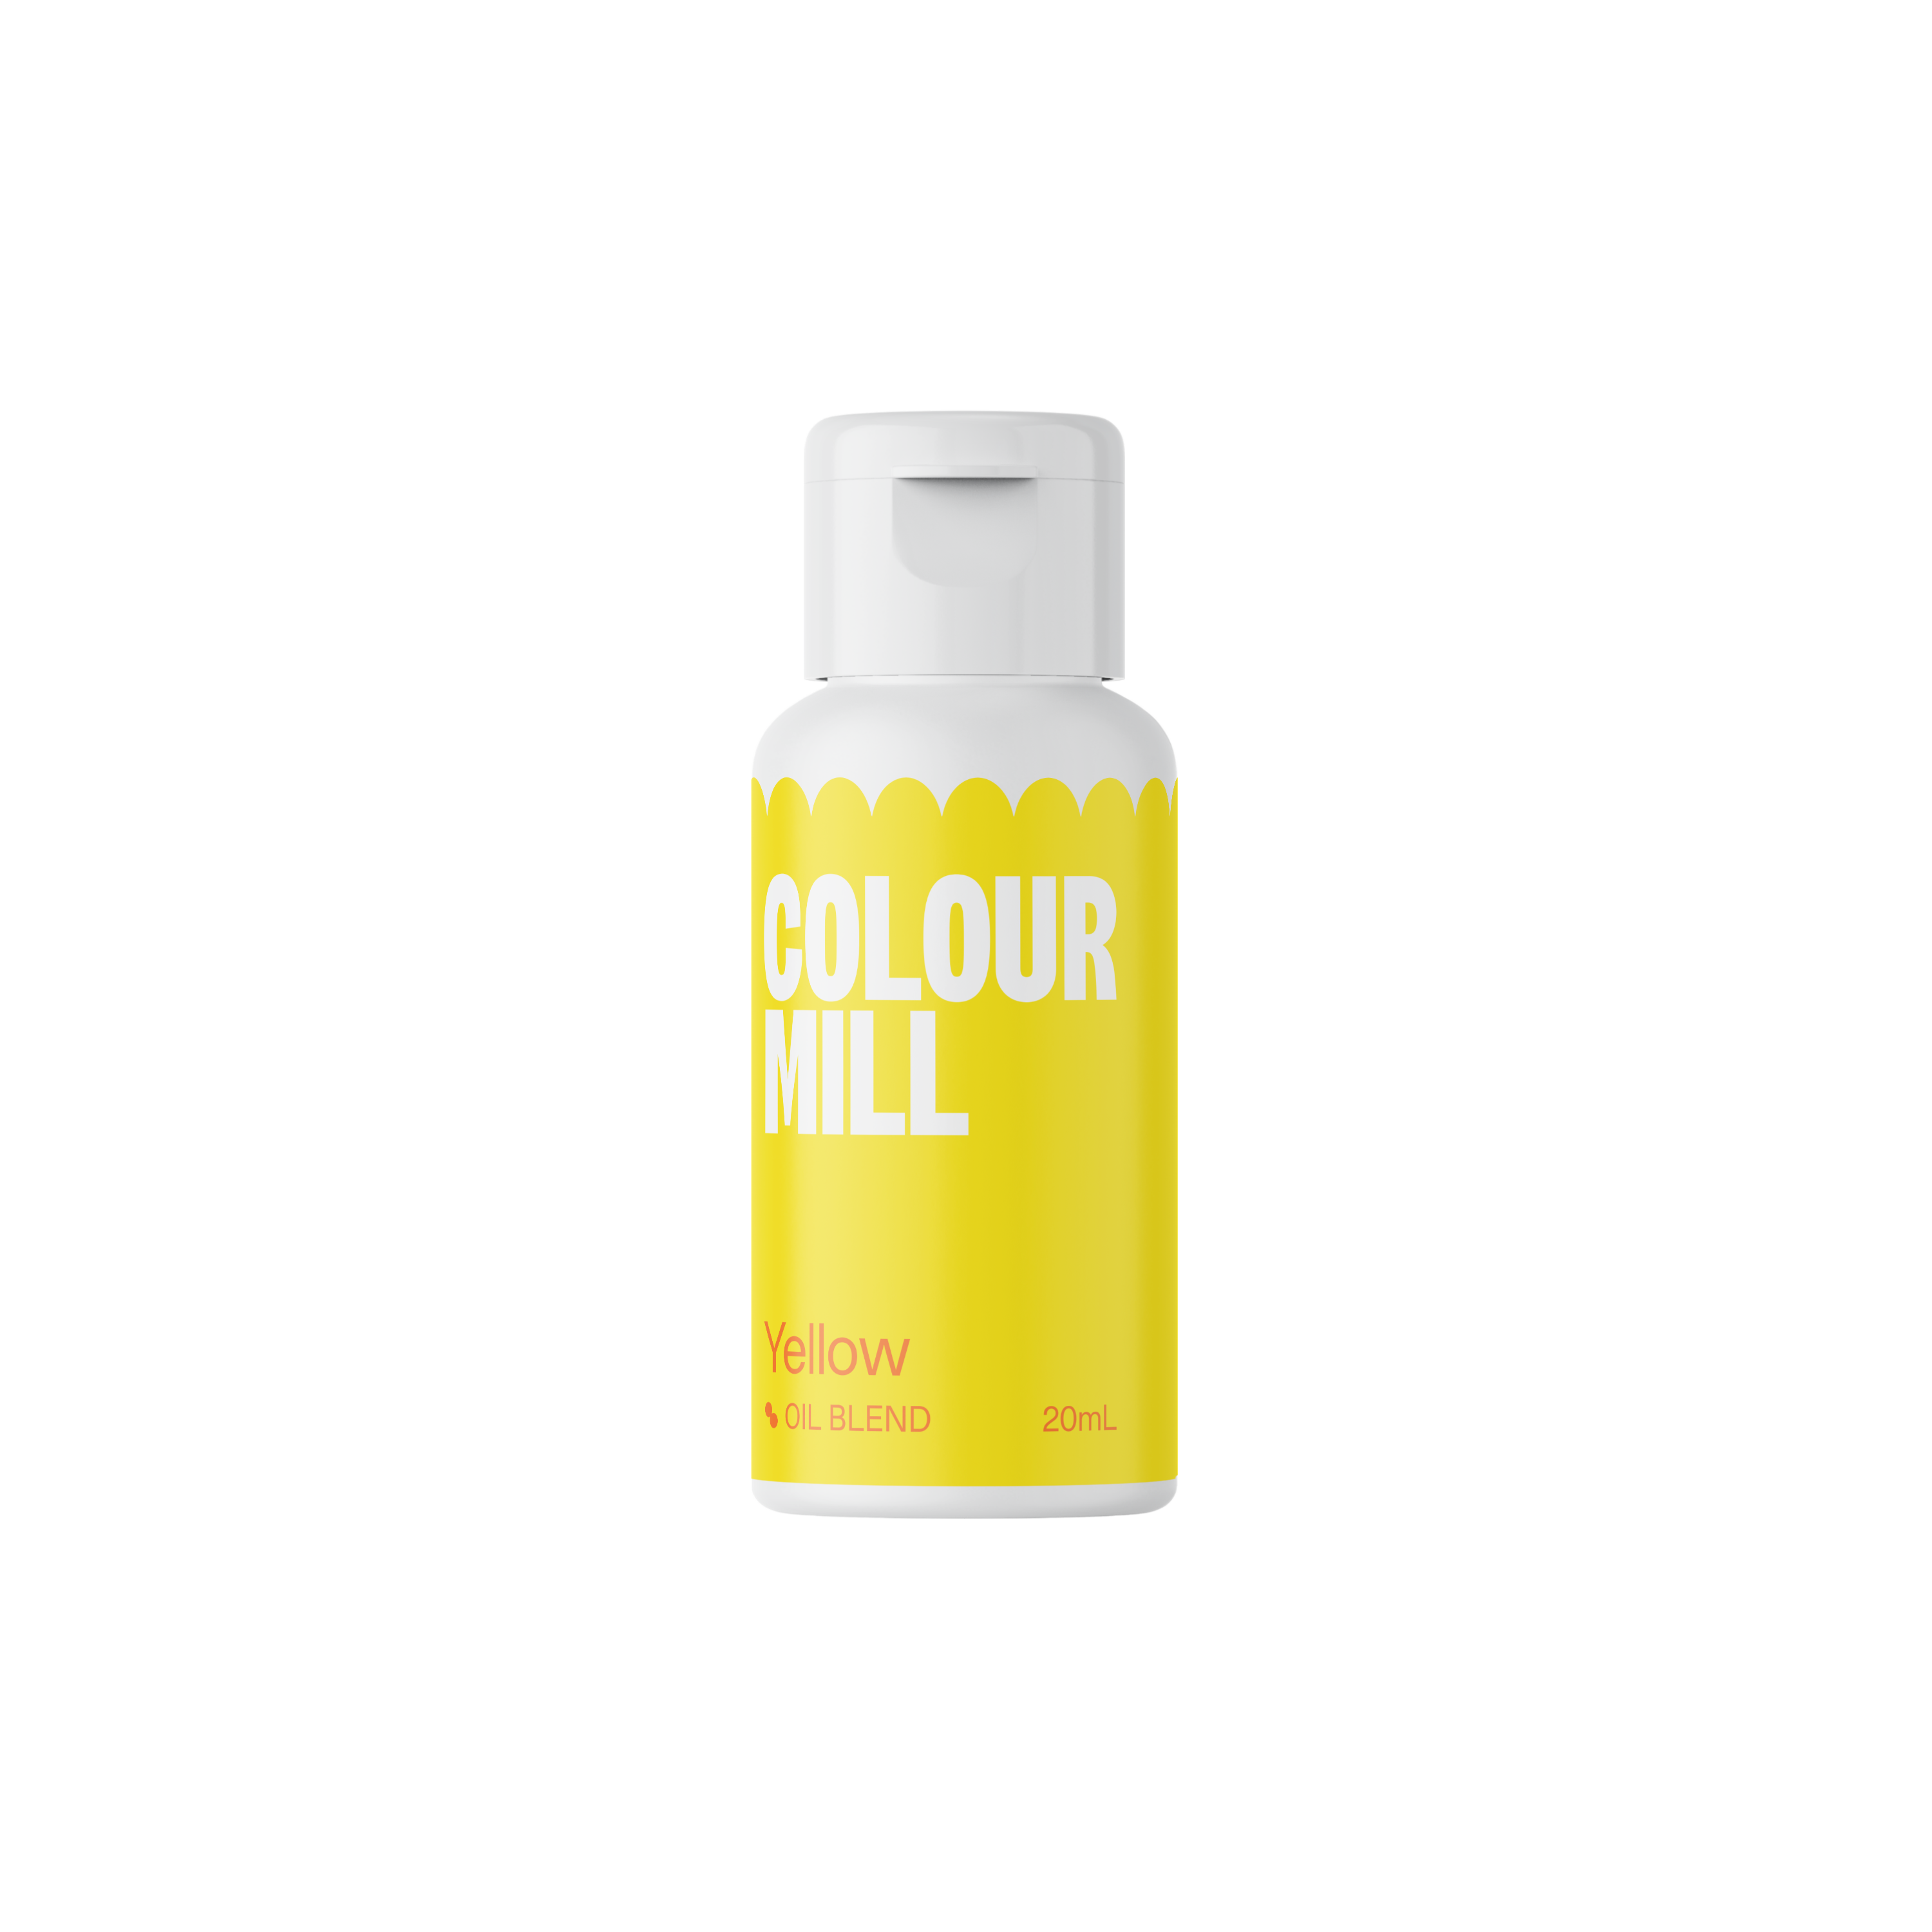 Colour Mill Essentials Bundle (160 Bottles) Oil Based Food Colouring